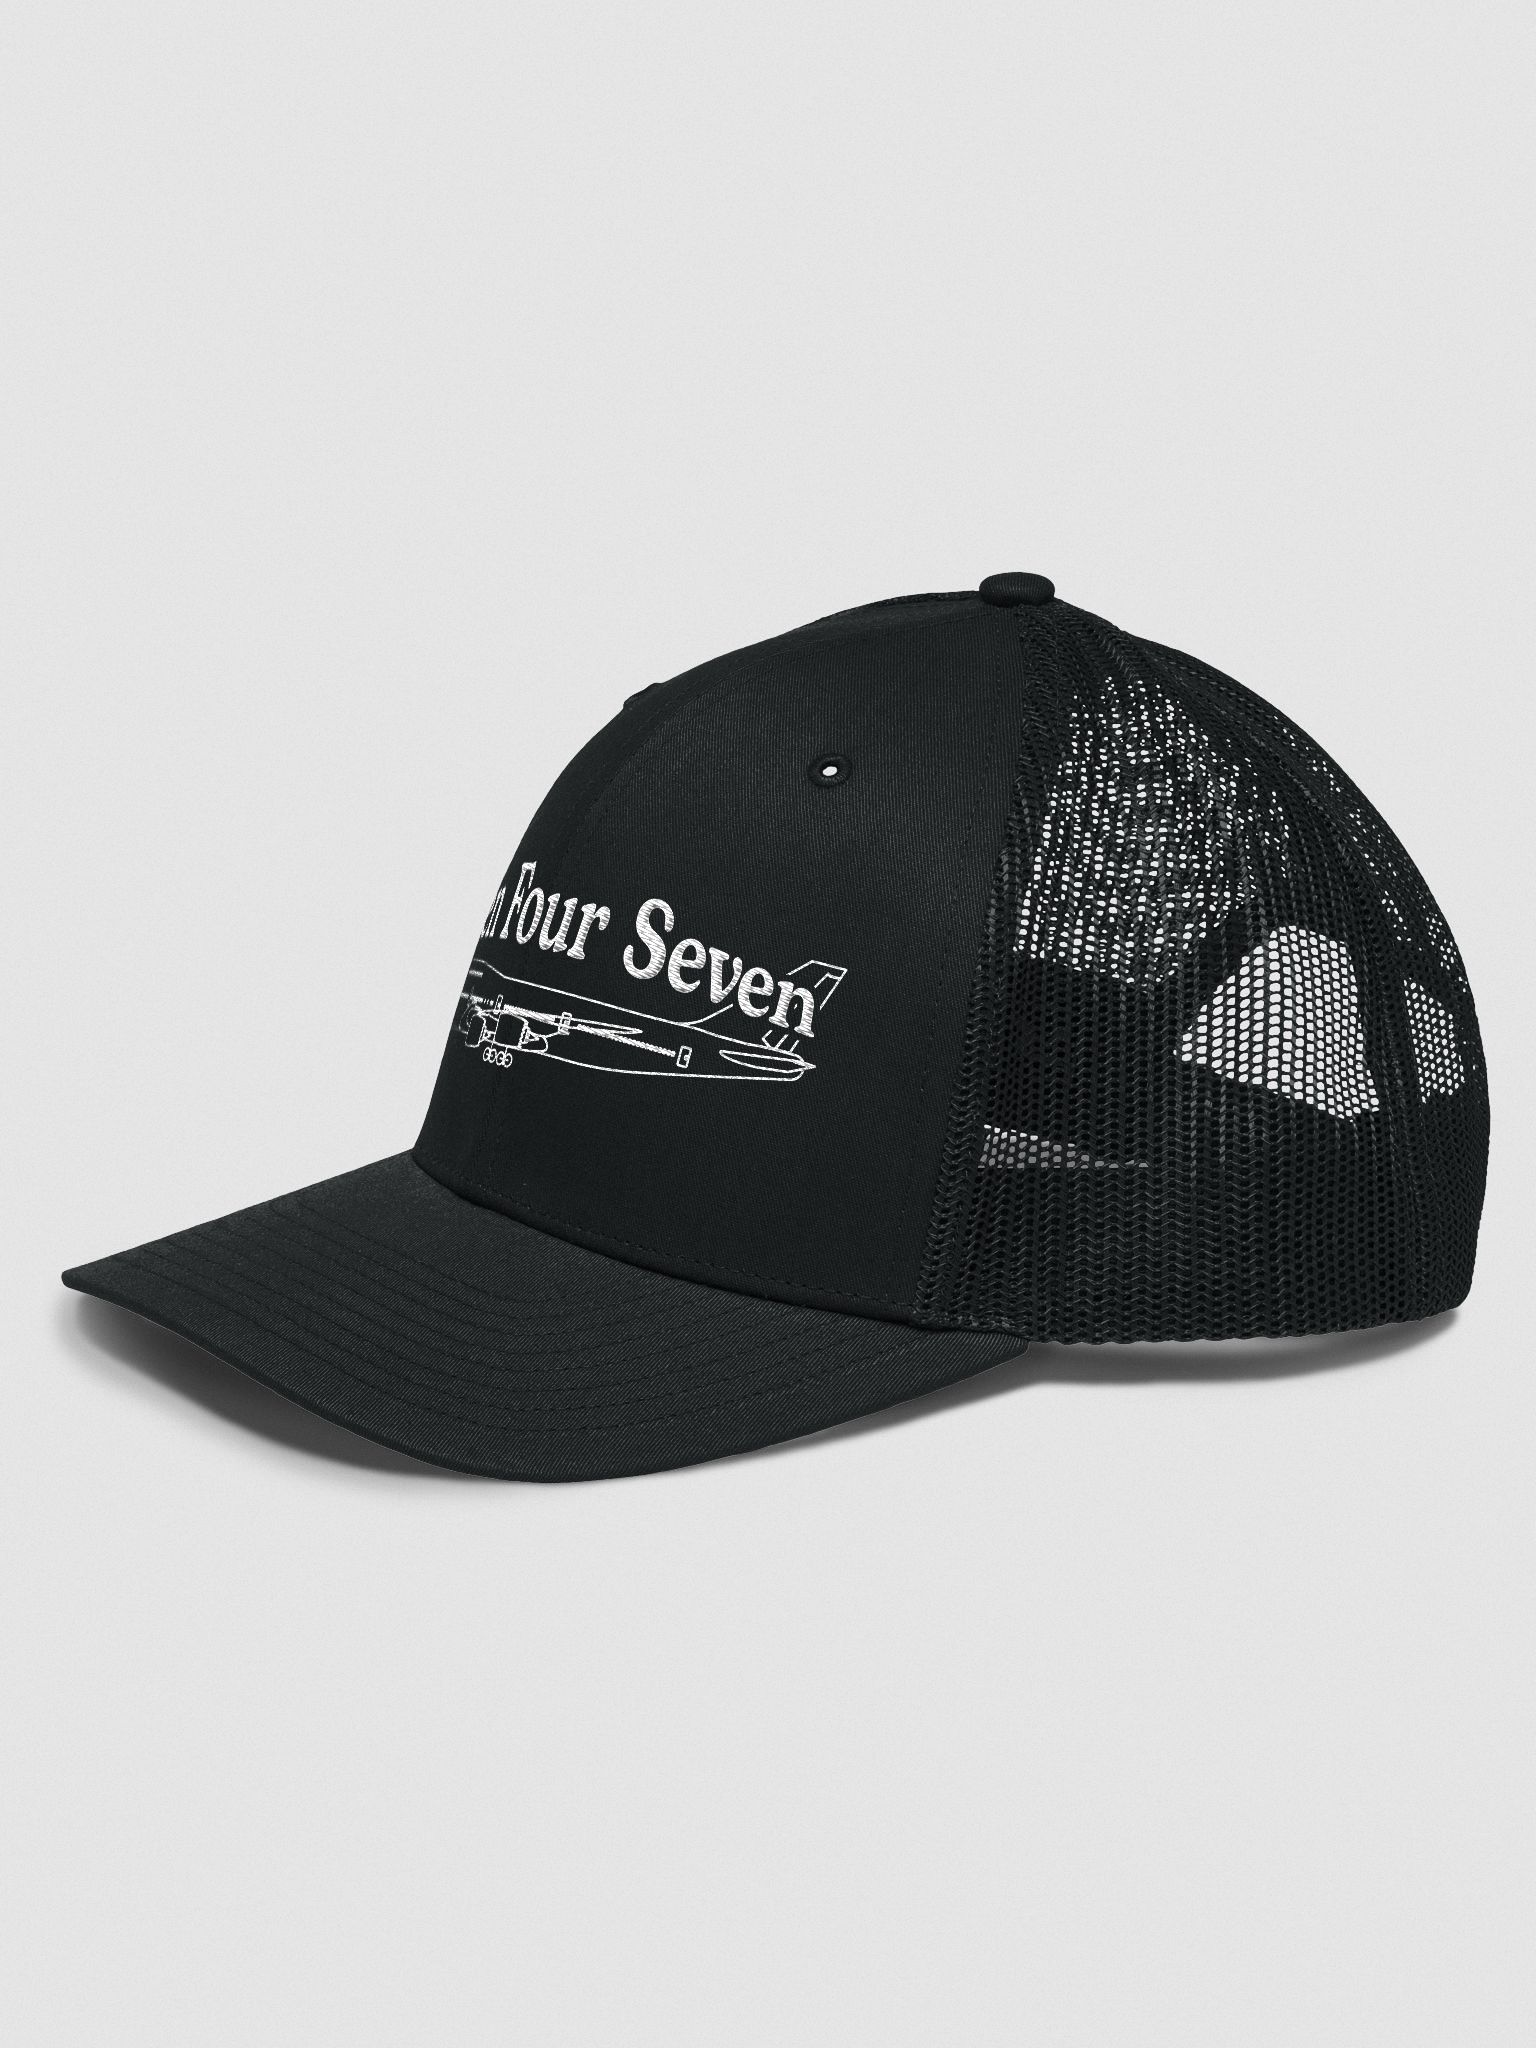 Seven Four Seven Trucker Hat | The Aviation Central